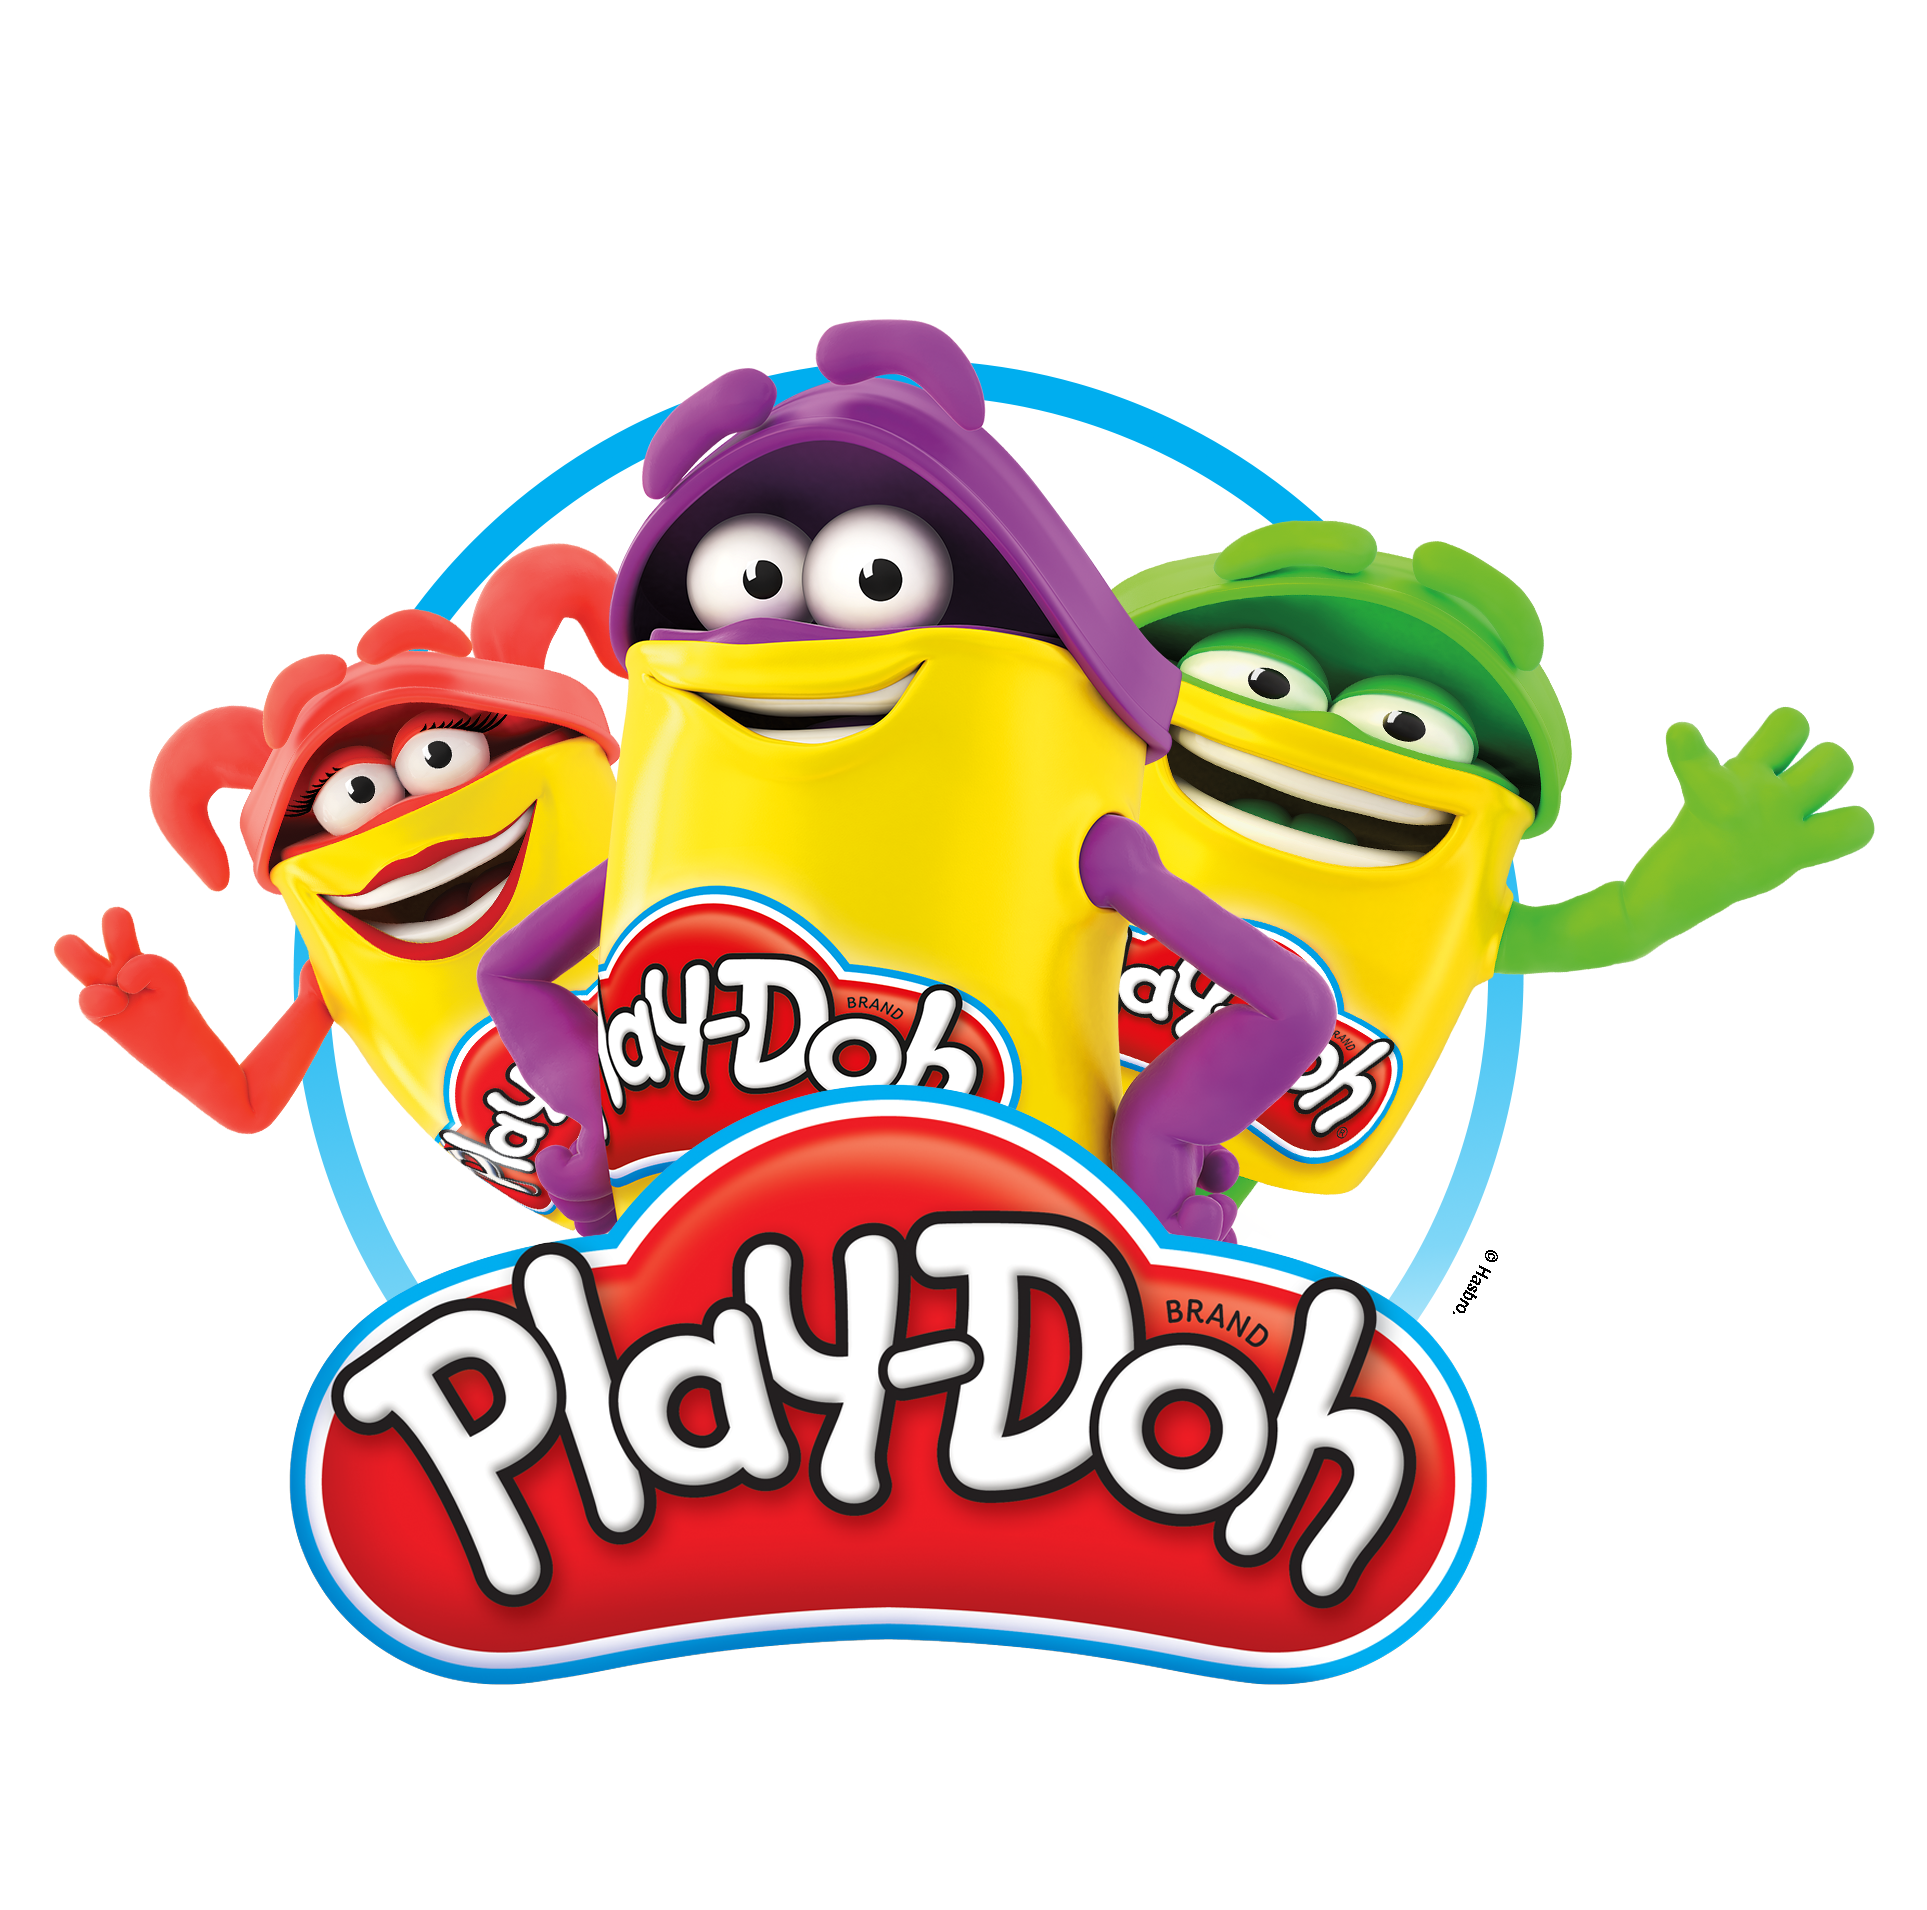 Play-Doh Roundel v2 Geelong[2][1] | Geelong Coast Kids